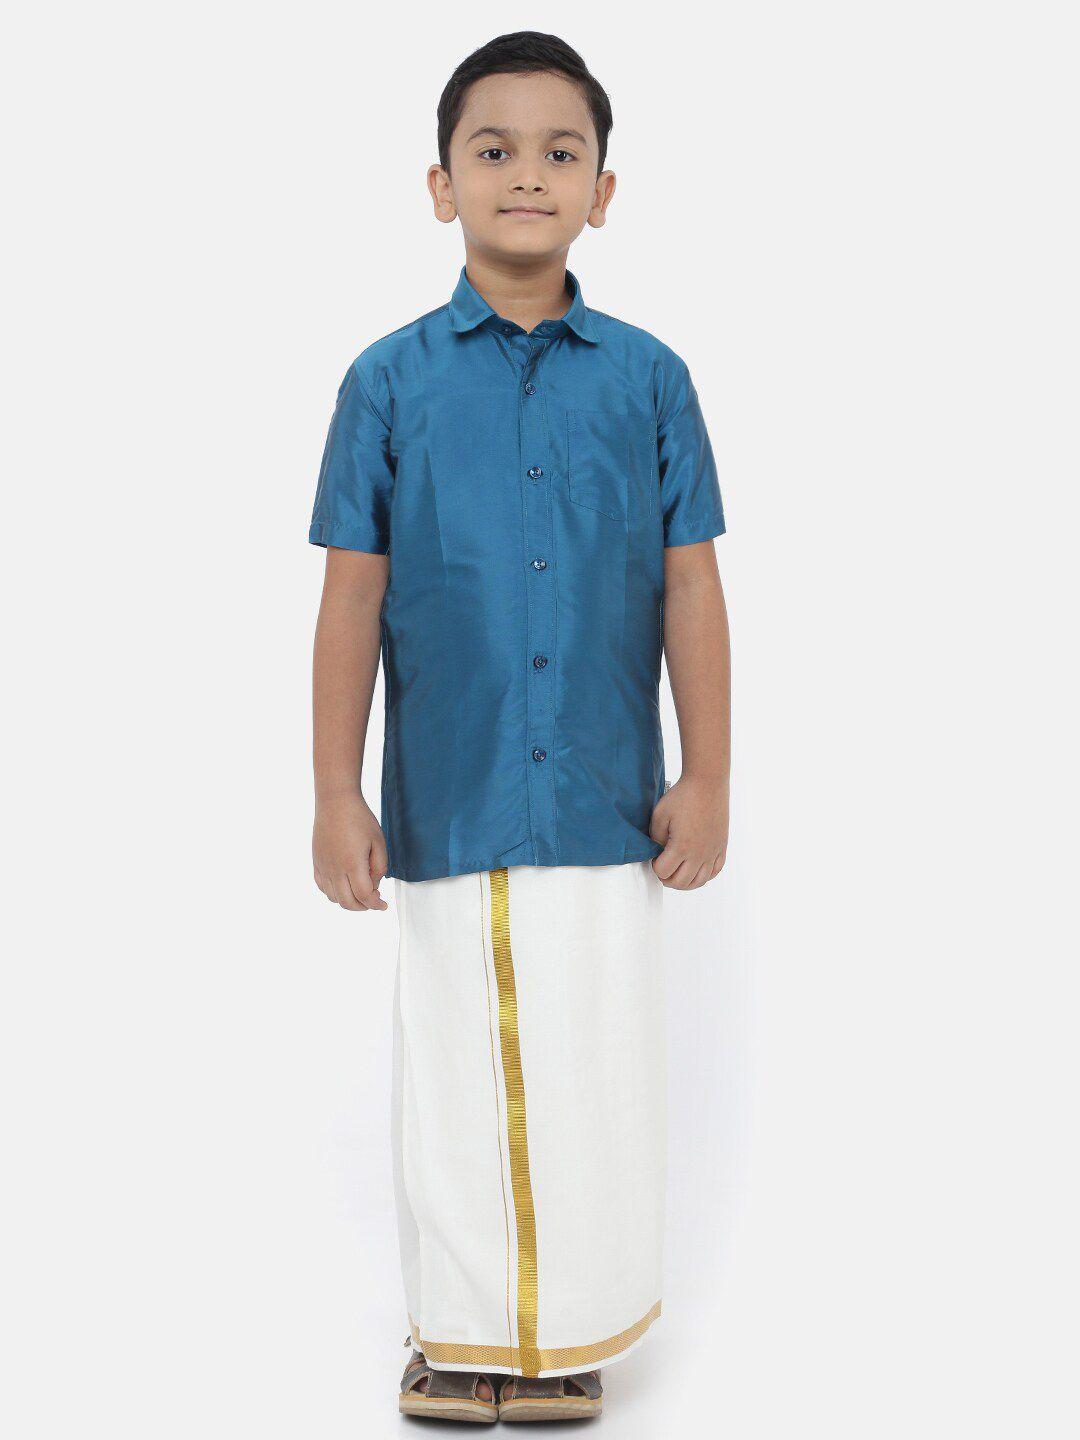 littlestars boys blue & white shirt with dhoti pants